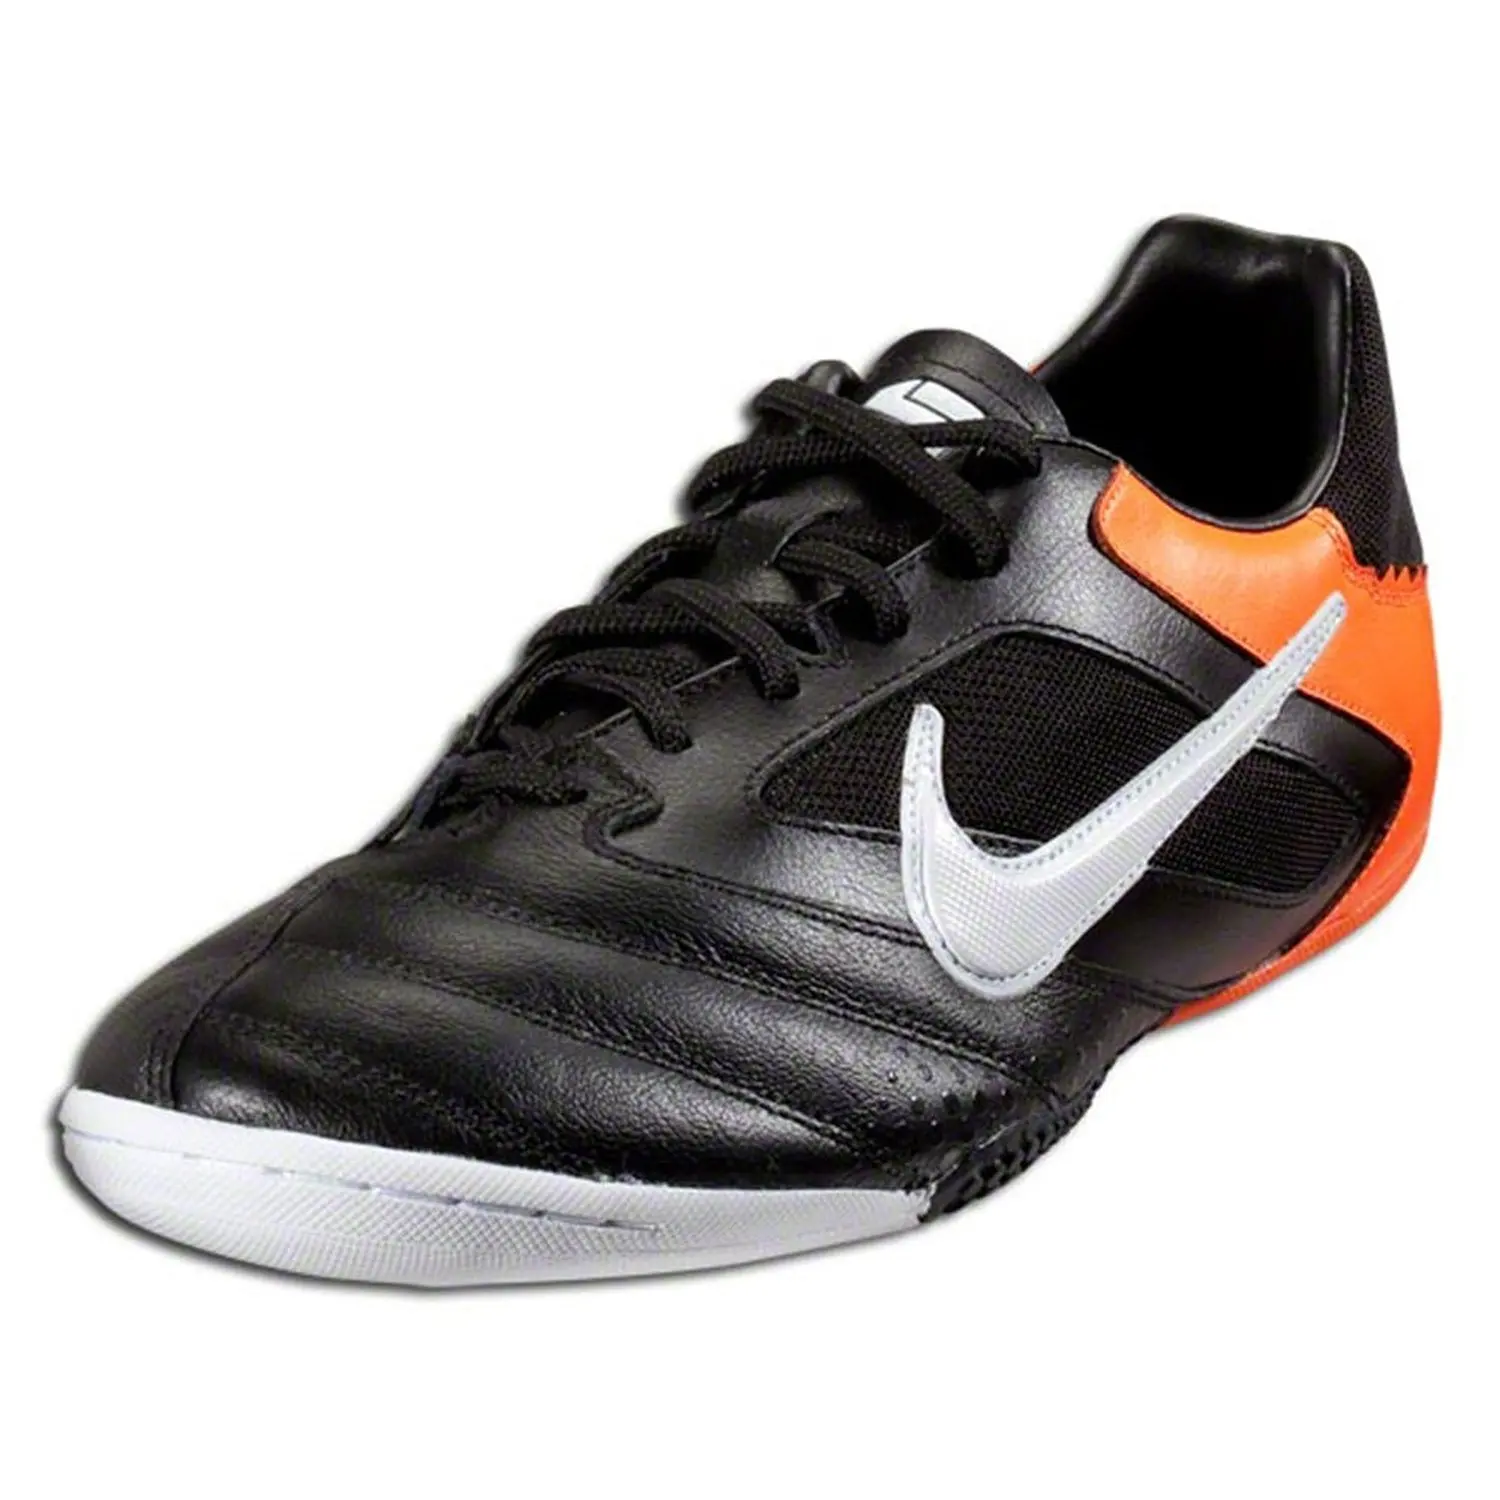 nike indoor soccer shoes elastico